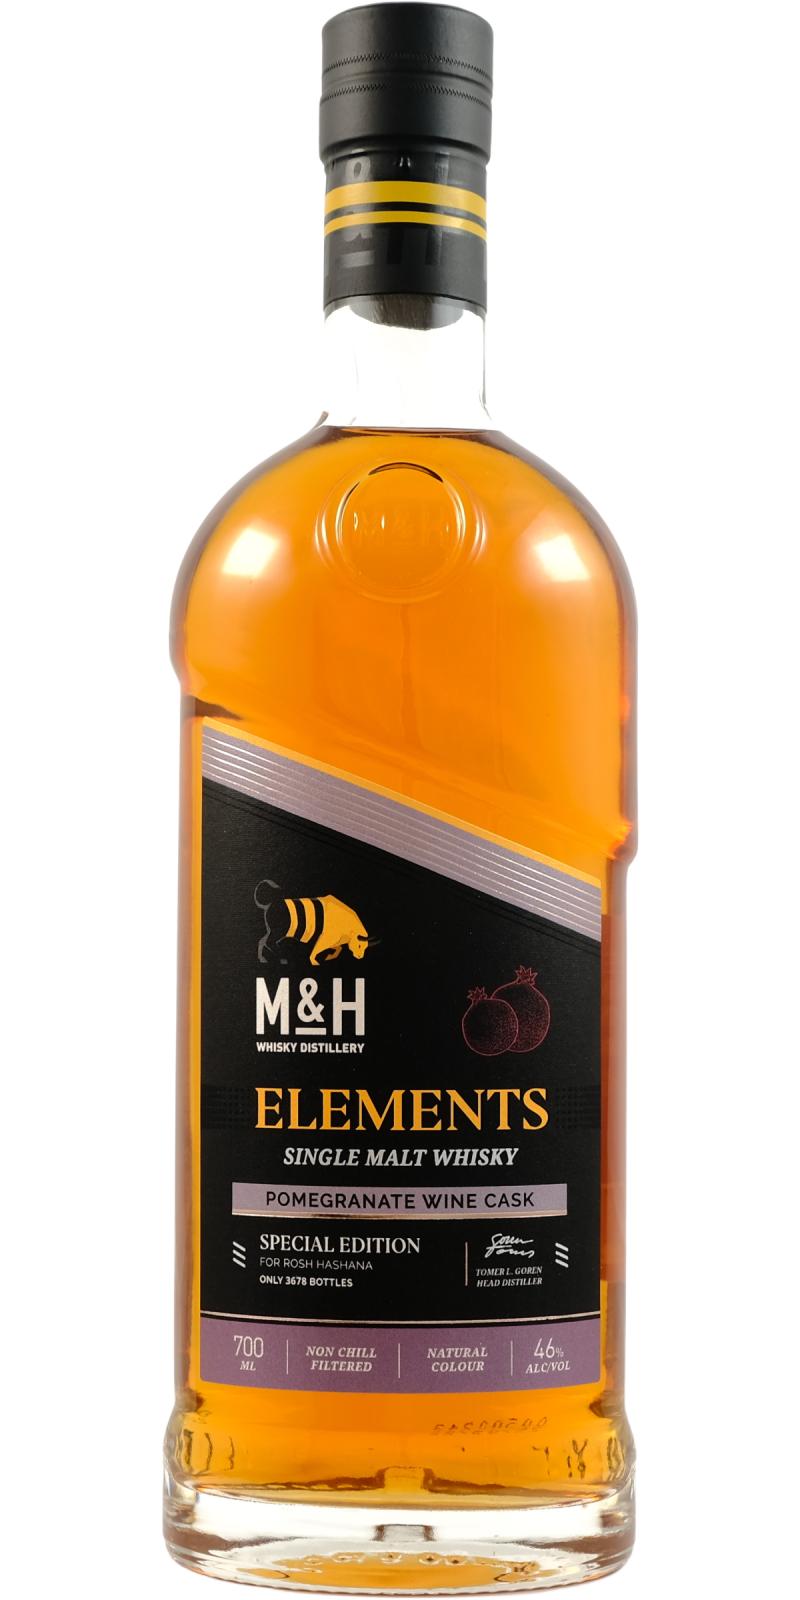 M&H Elements Pomegranate Wine Rosh Hashana 46% 700ml